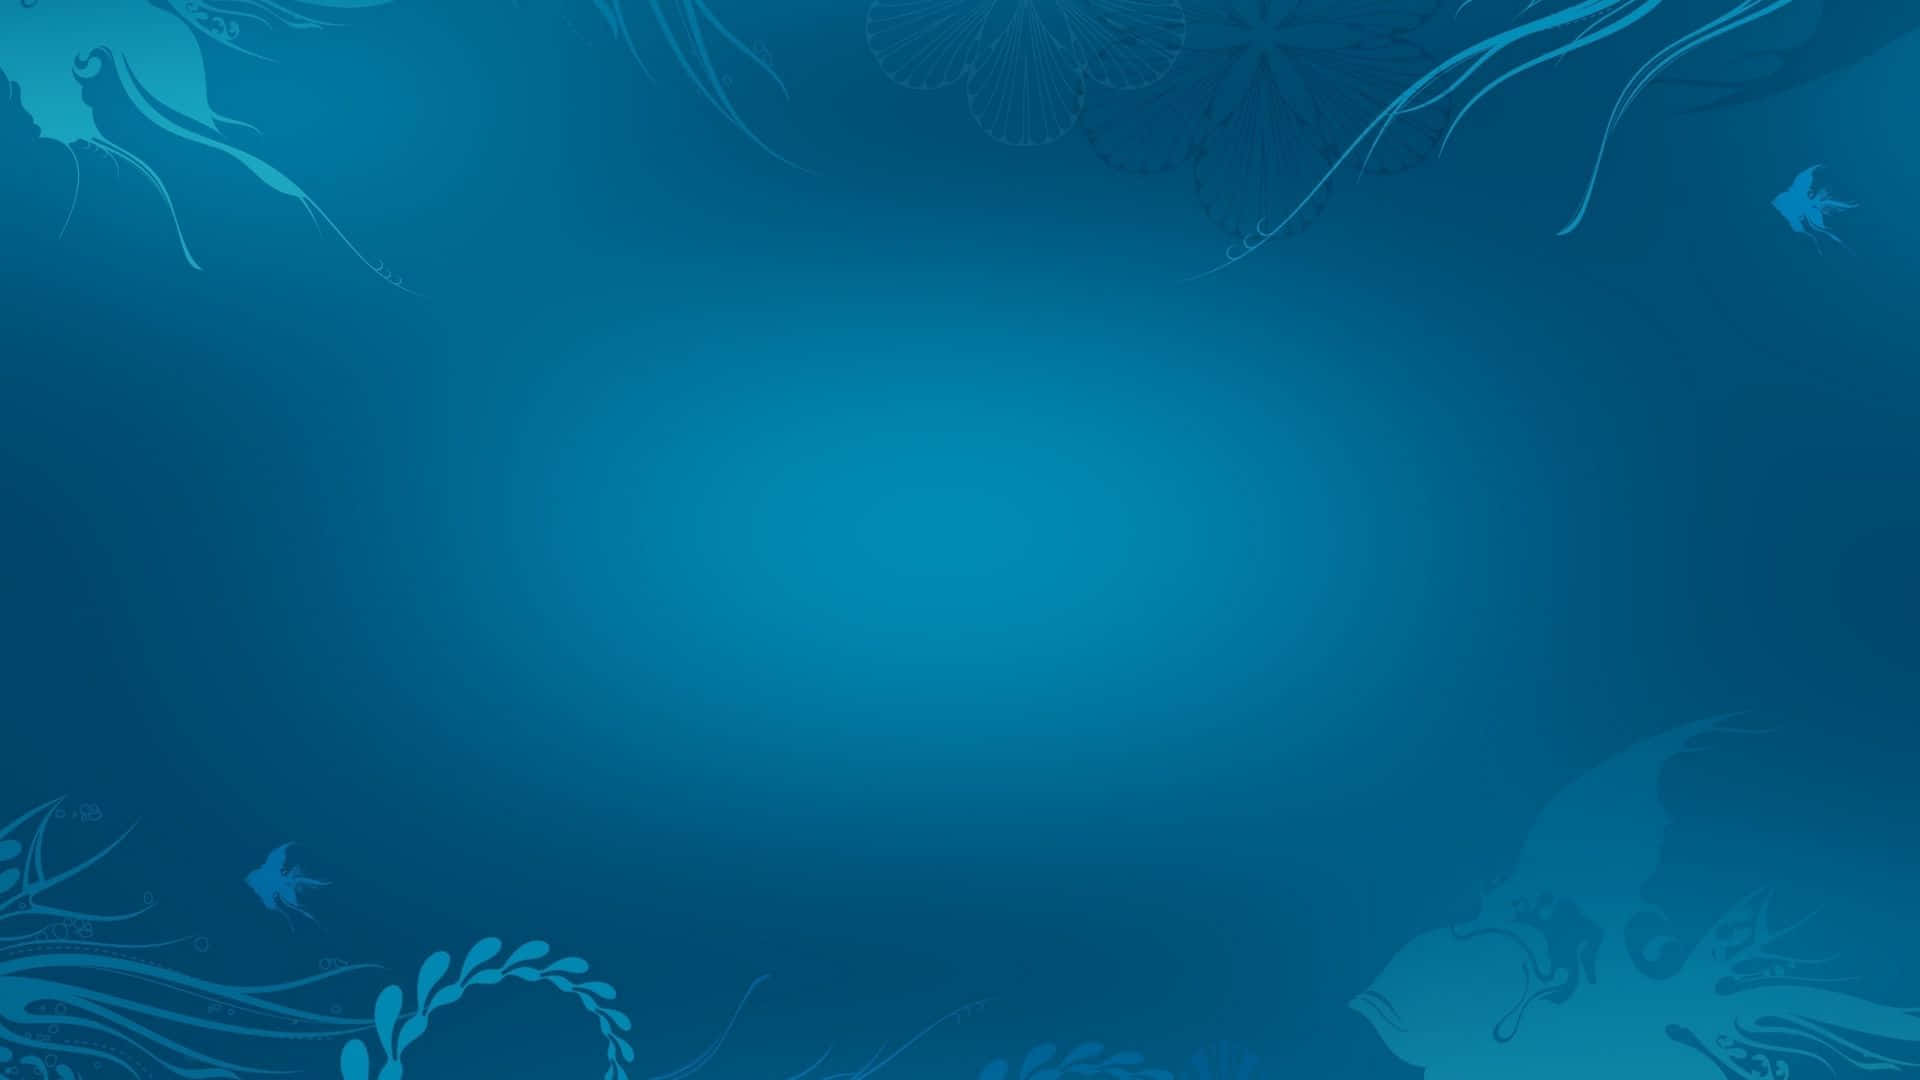 Underwater Illustrations Blue PC Wallpaper